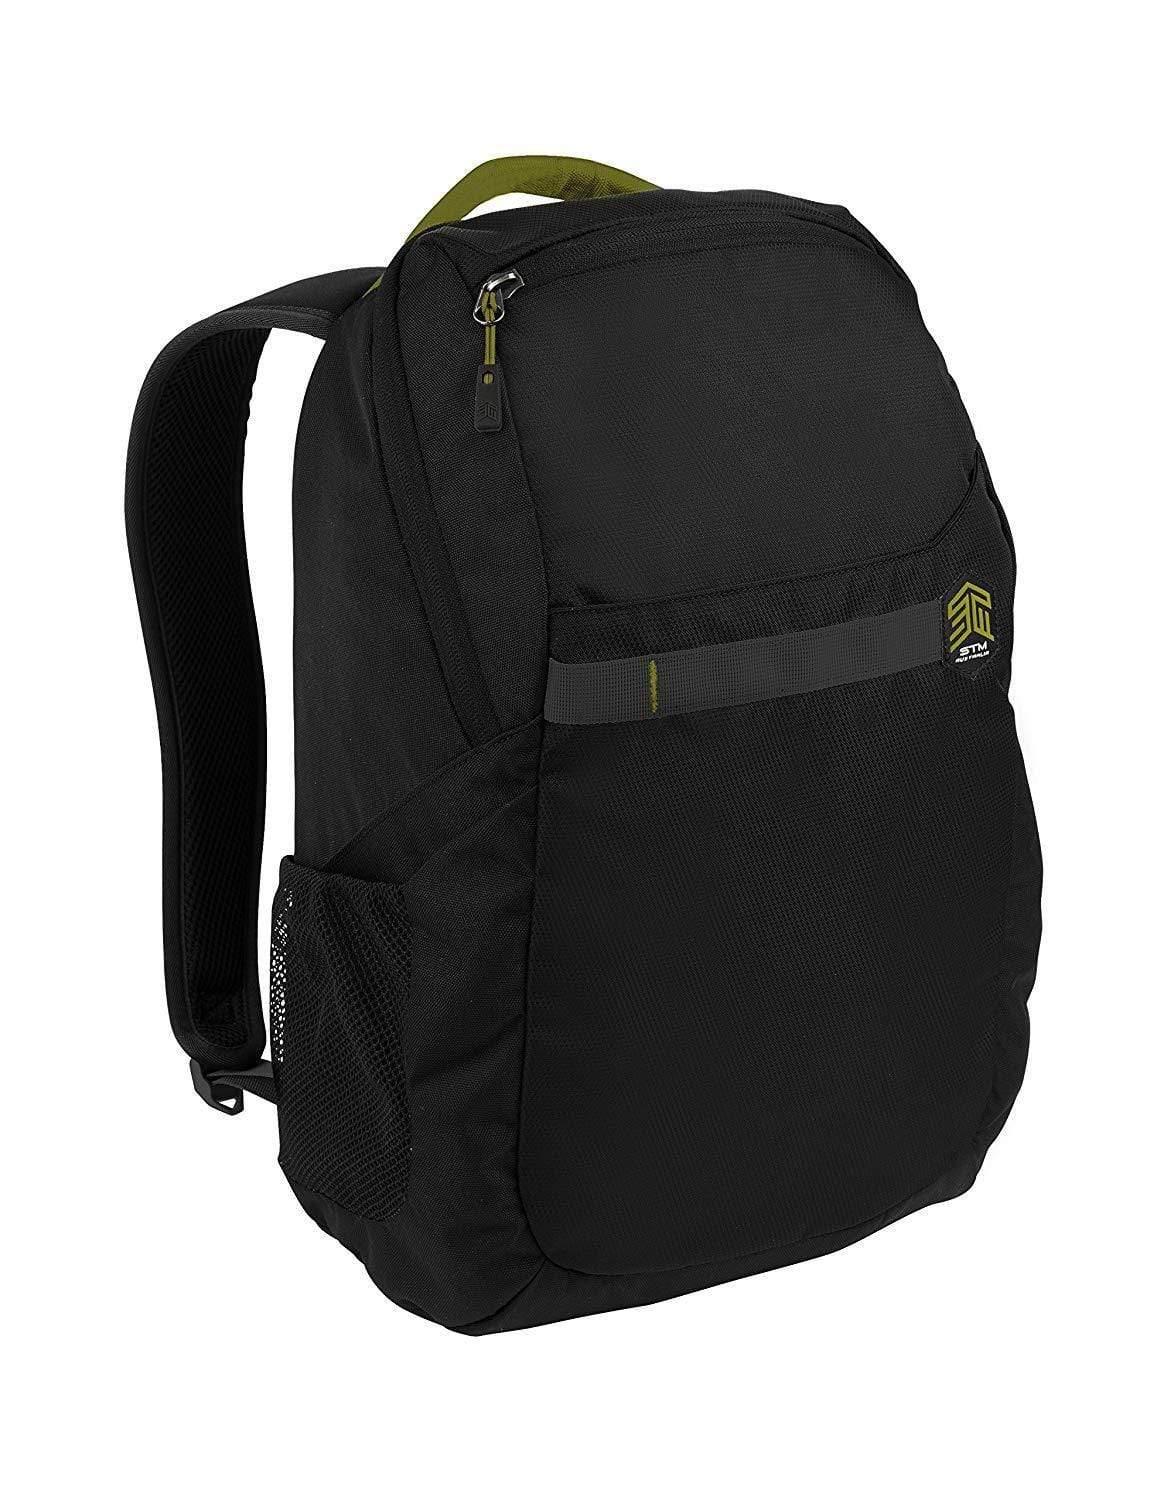 حقيبة ظهر للابتوب ( حقيبة سفر ) - أسود STM Bags Backpack for Laptop